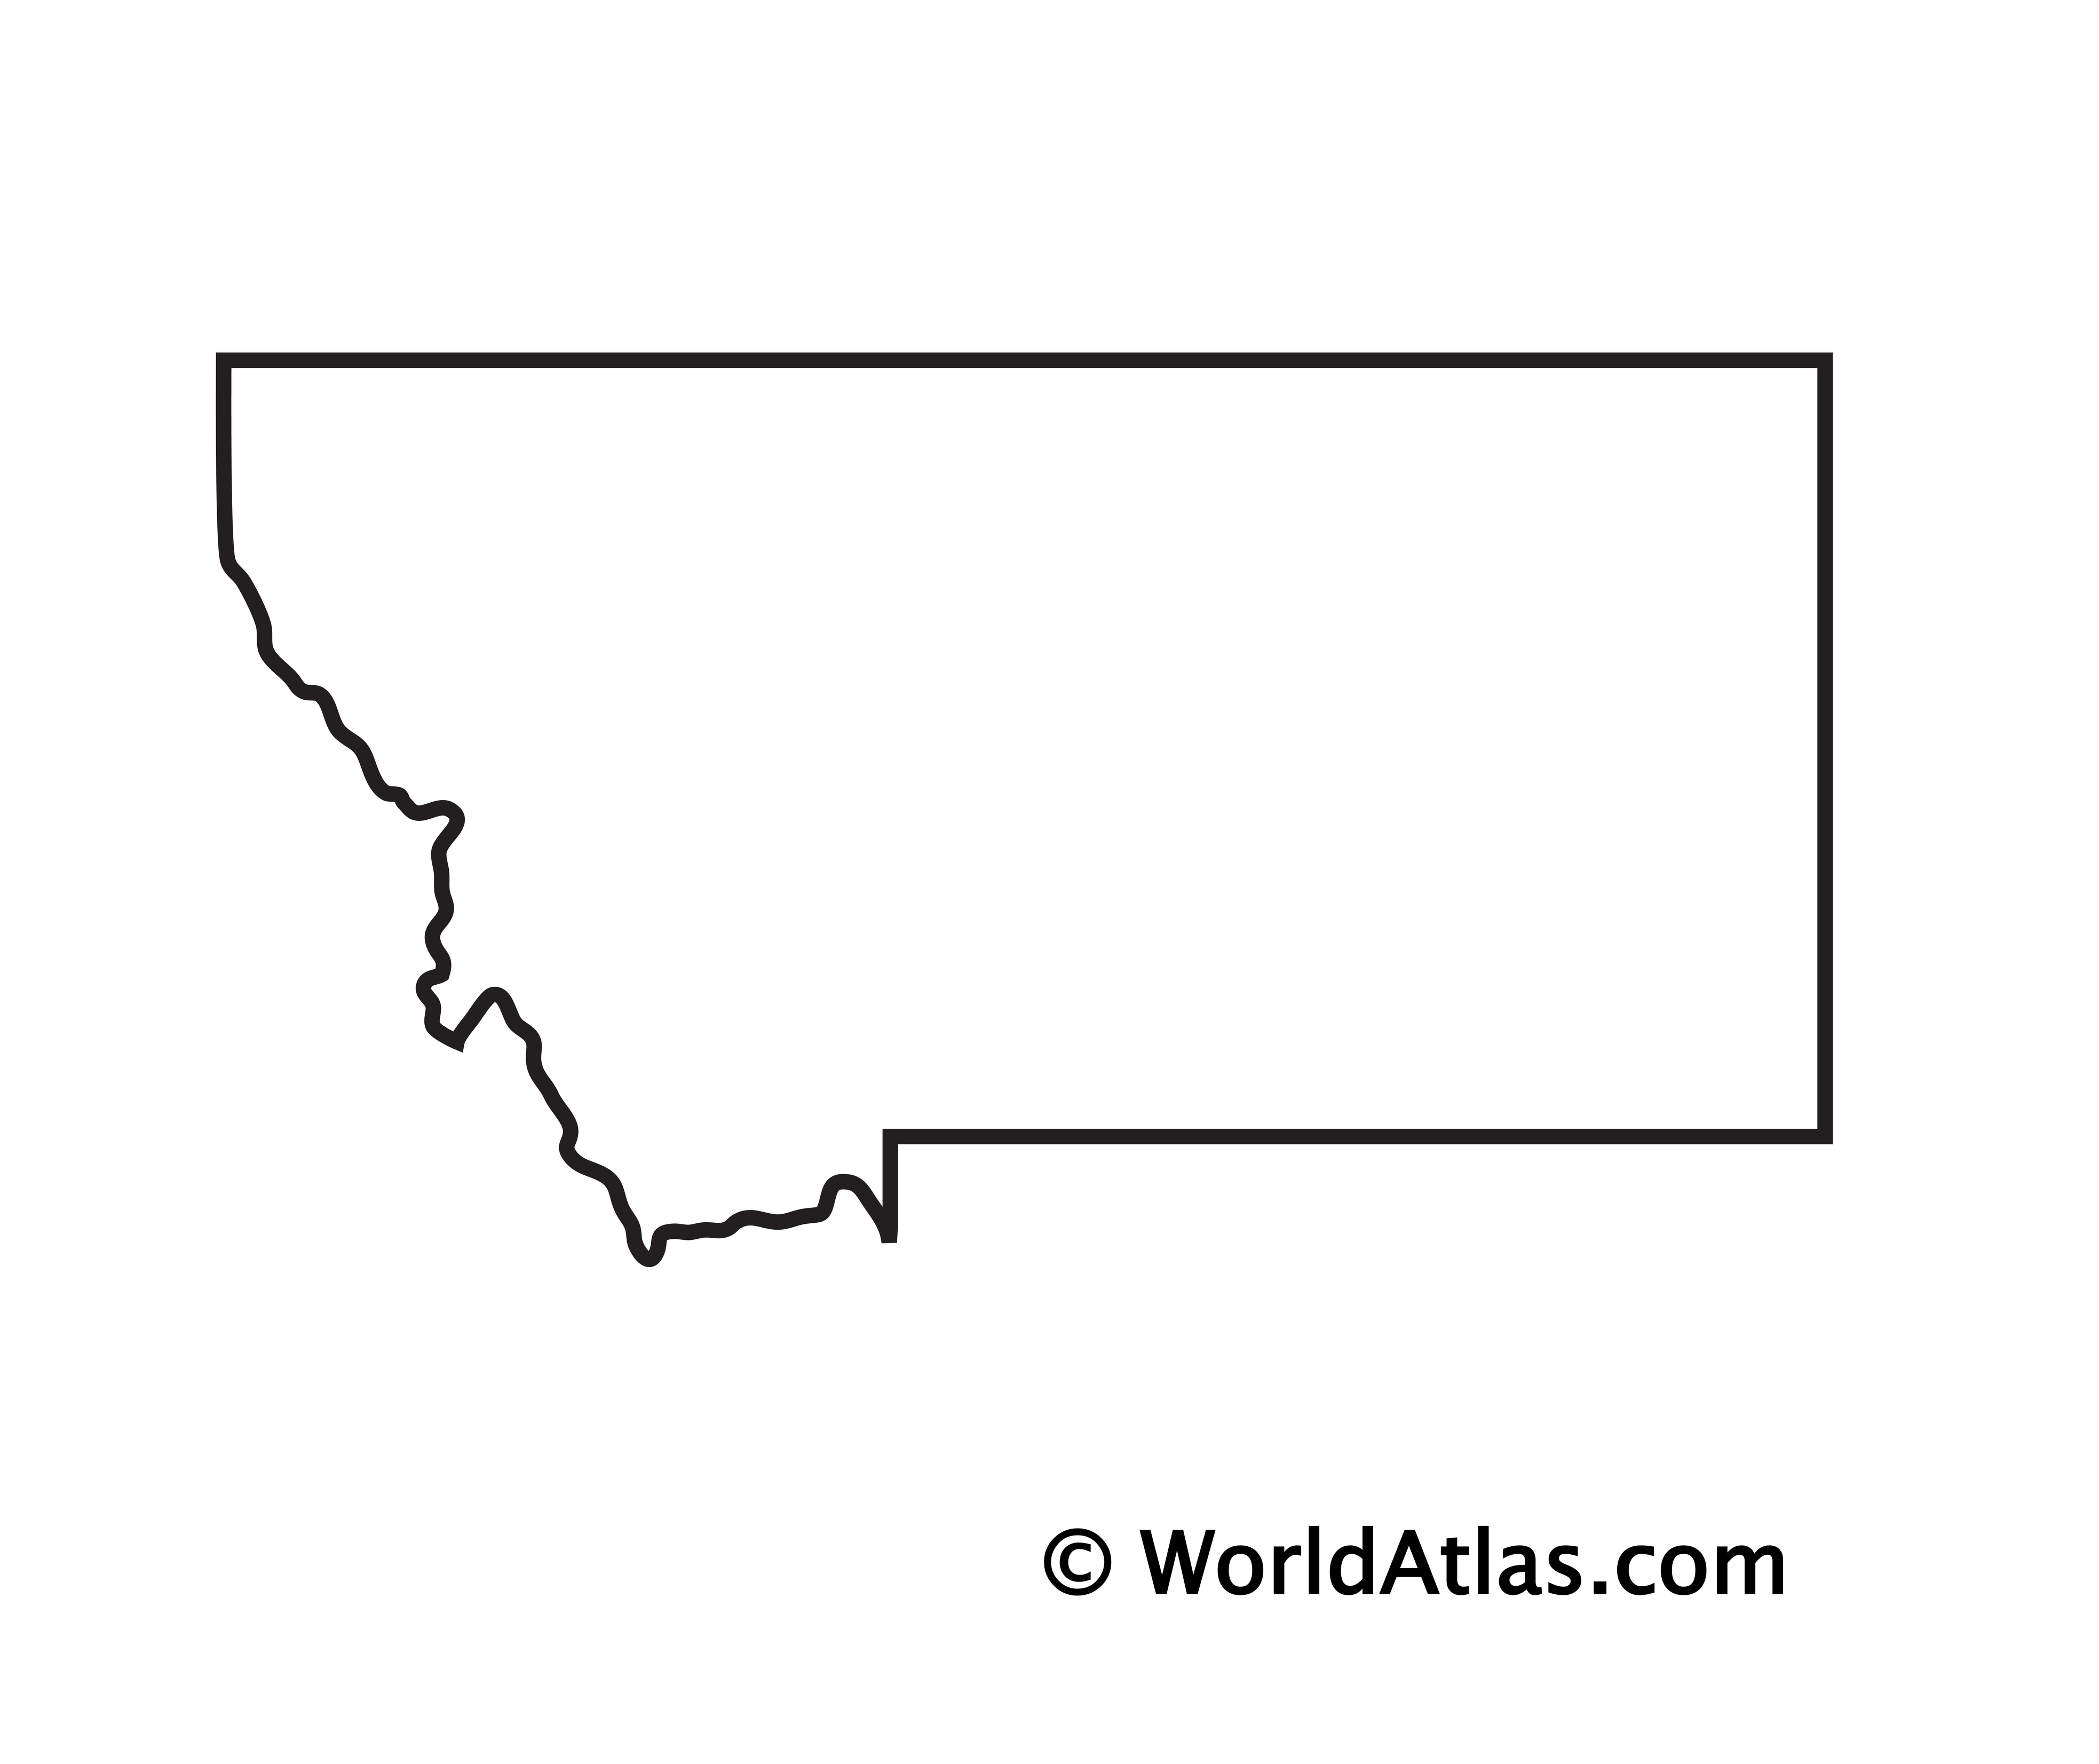 Locator Map of Montana, USA